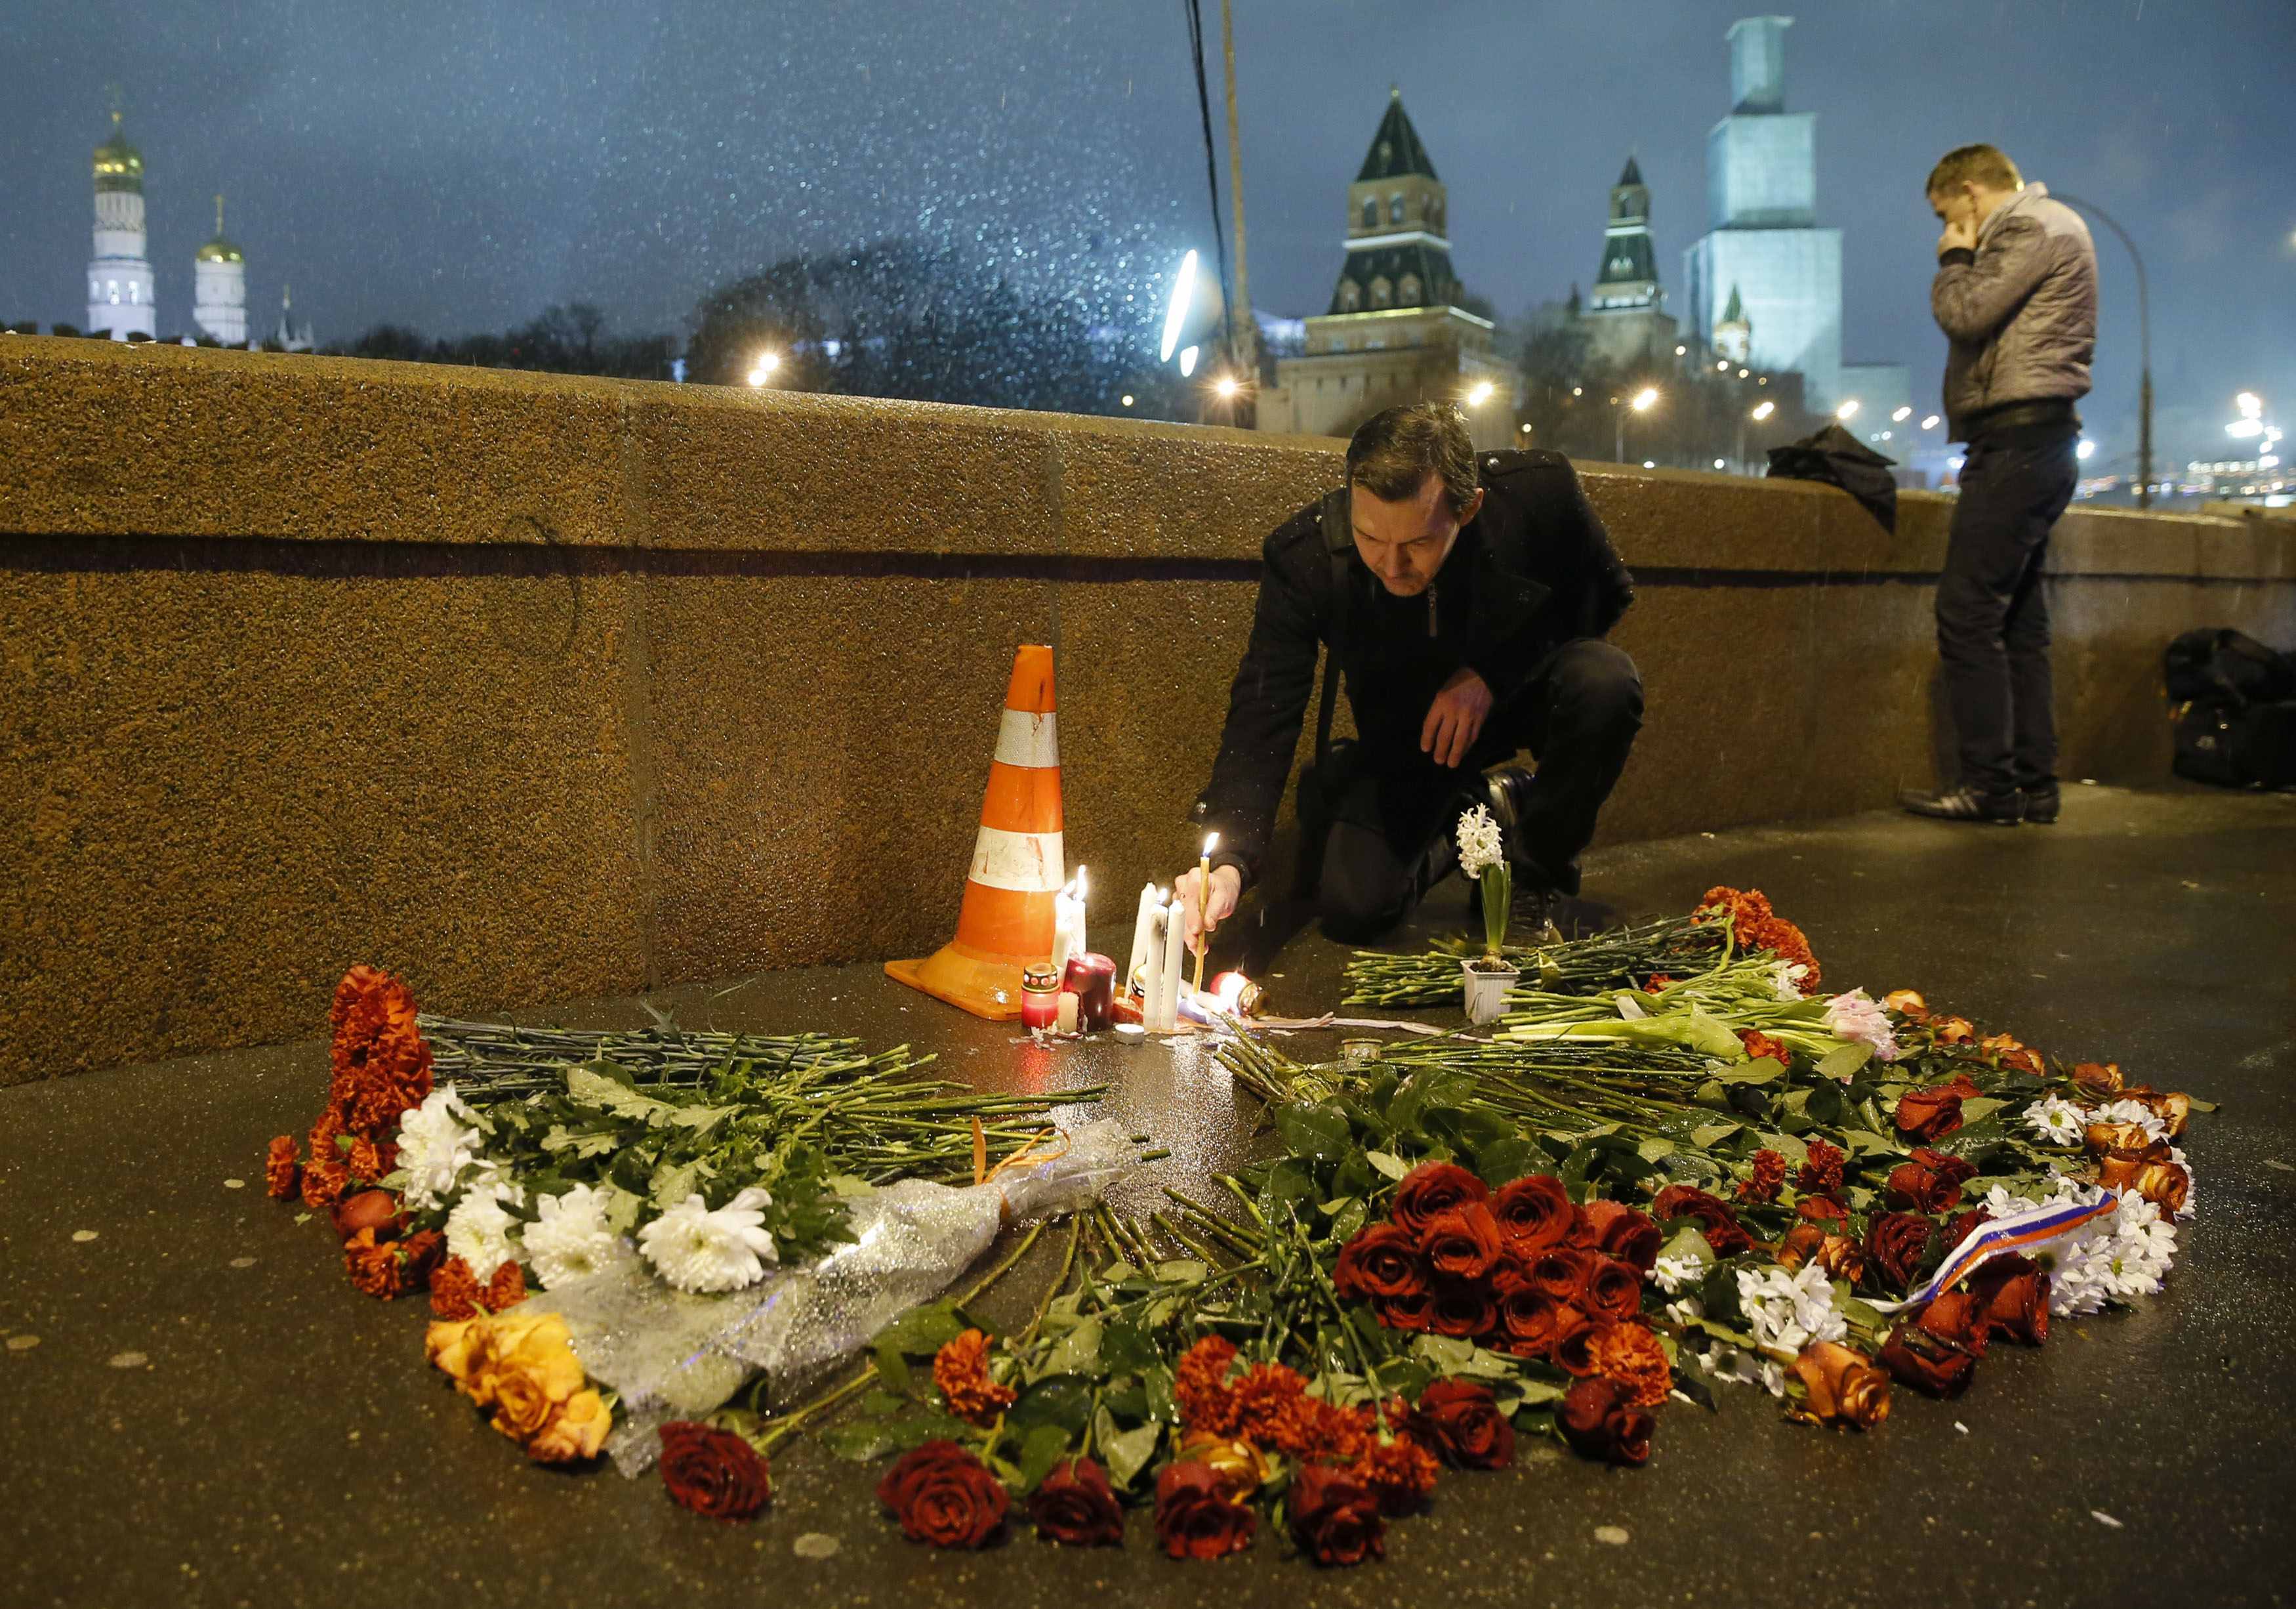 Putin critic Boris Nemtsov killed in drive-by shooting near.